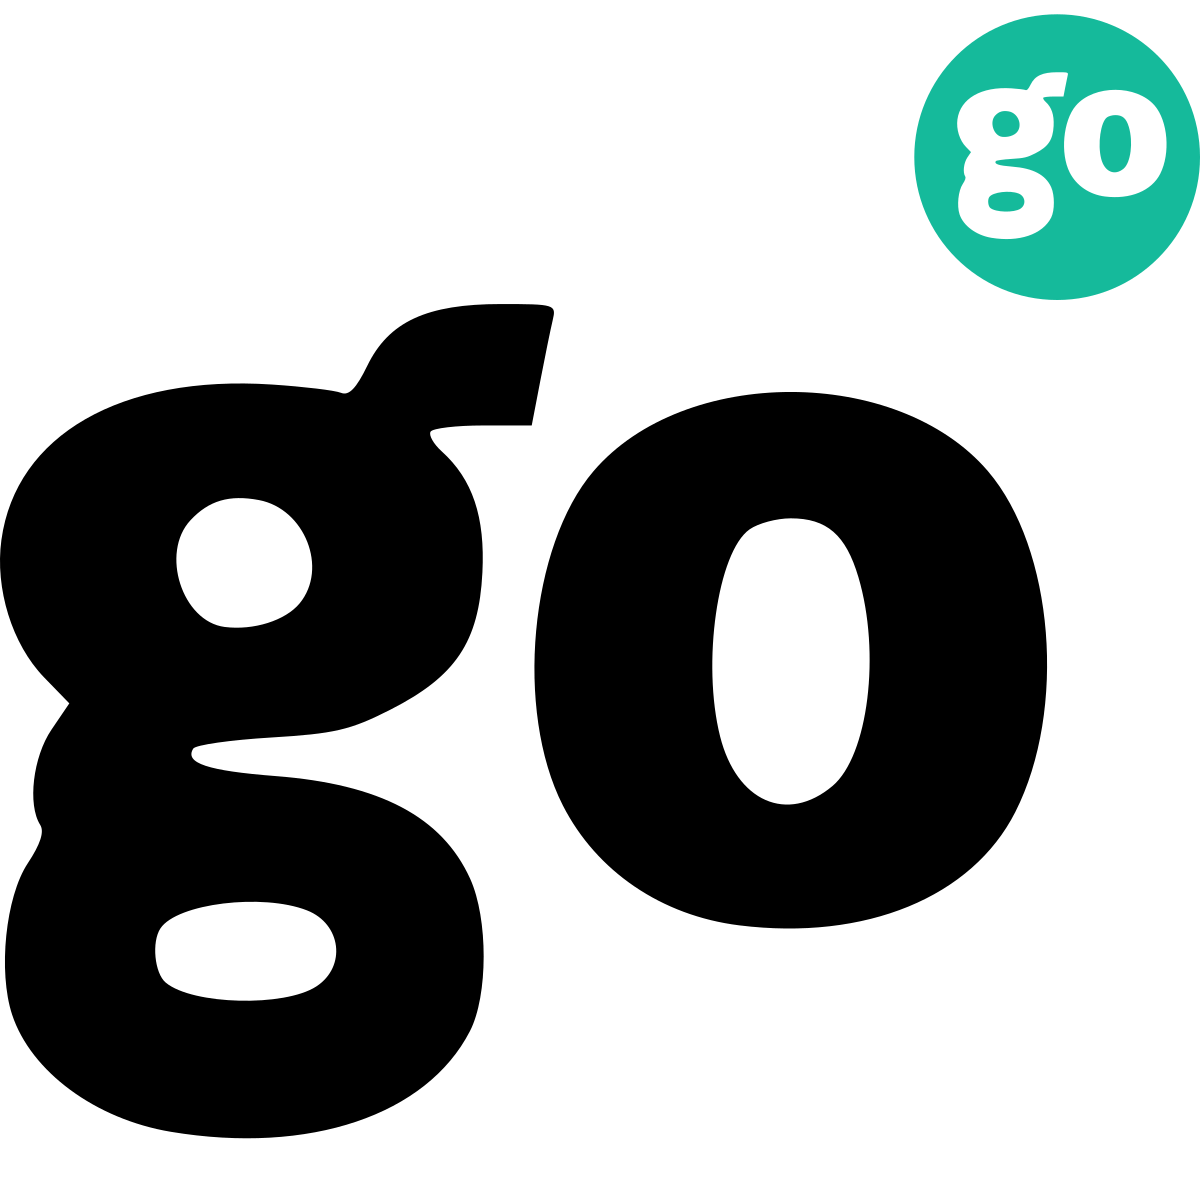 British Airline Logo - Go (airline)